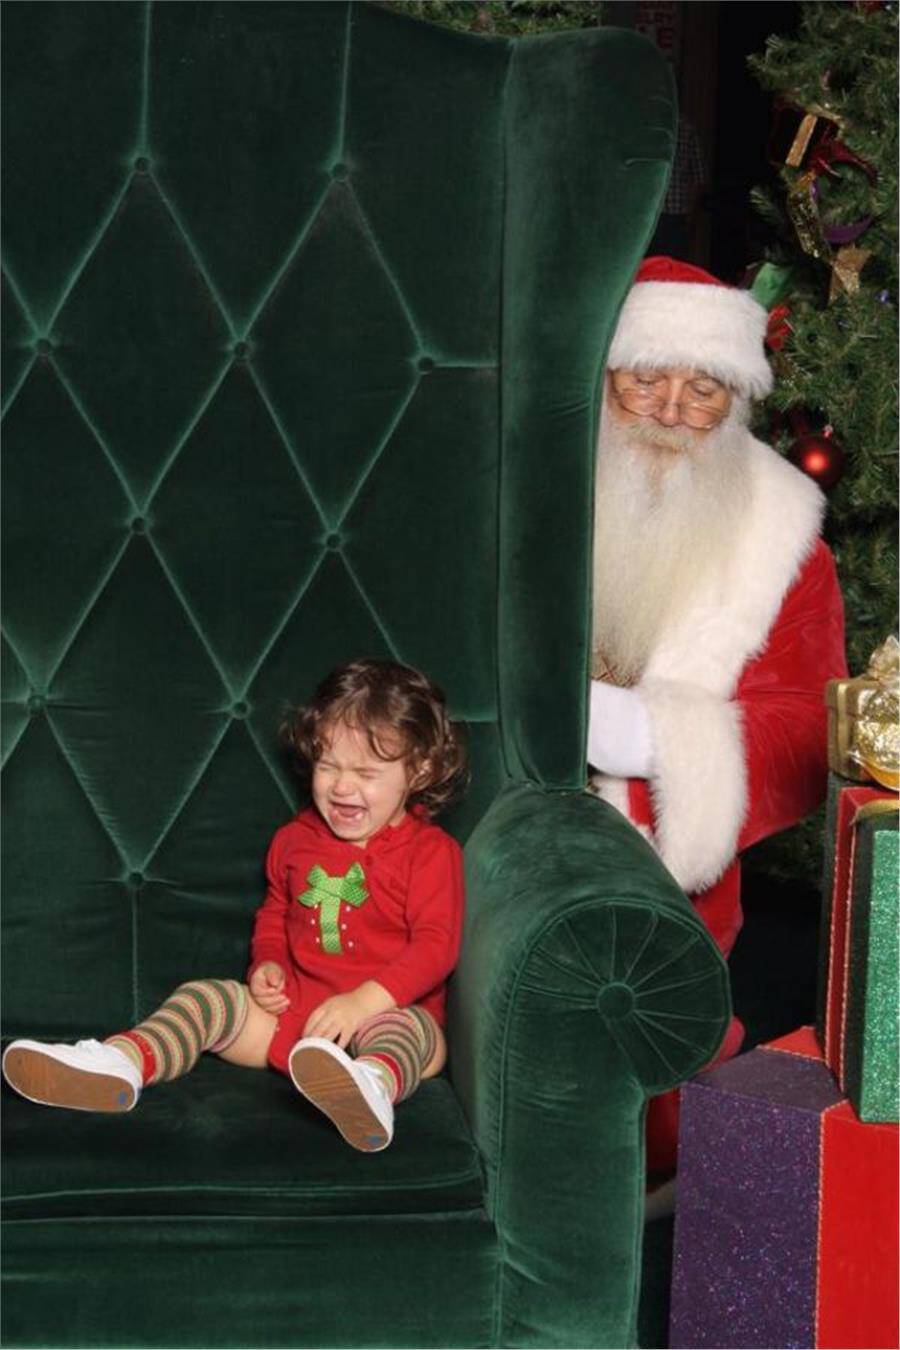 To μόνο πράγμα που μπορεί να ανατρέψει το Χριστουγεννιάτικο σκηνικό είναι απλά... ένα παιδί